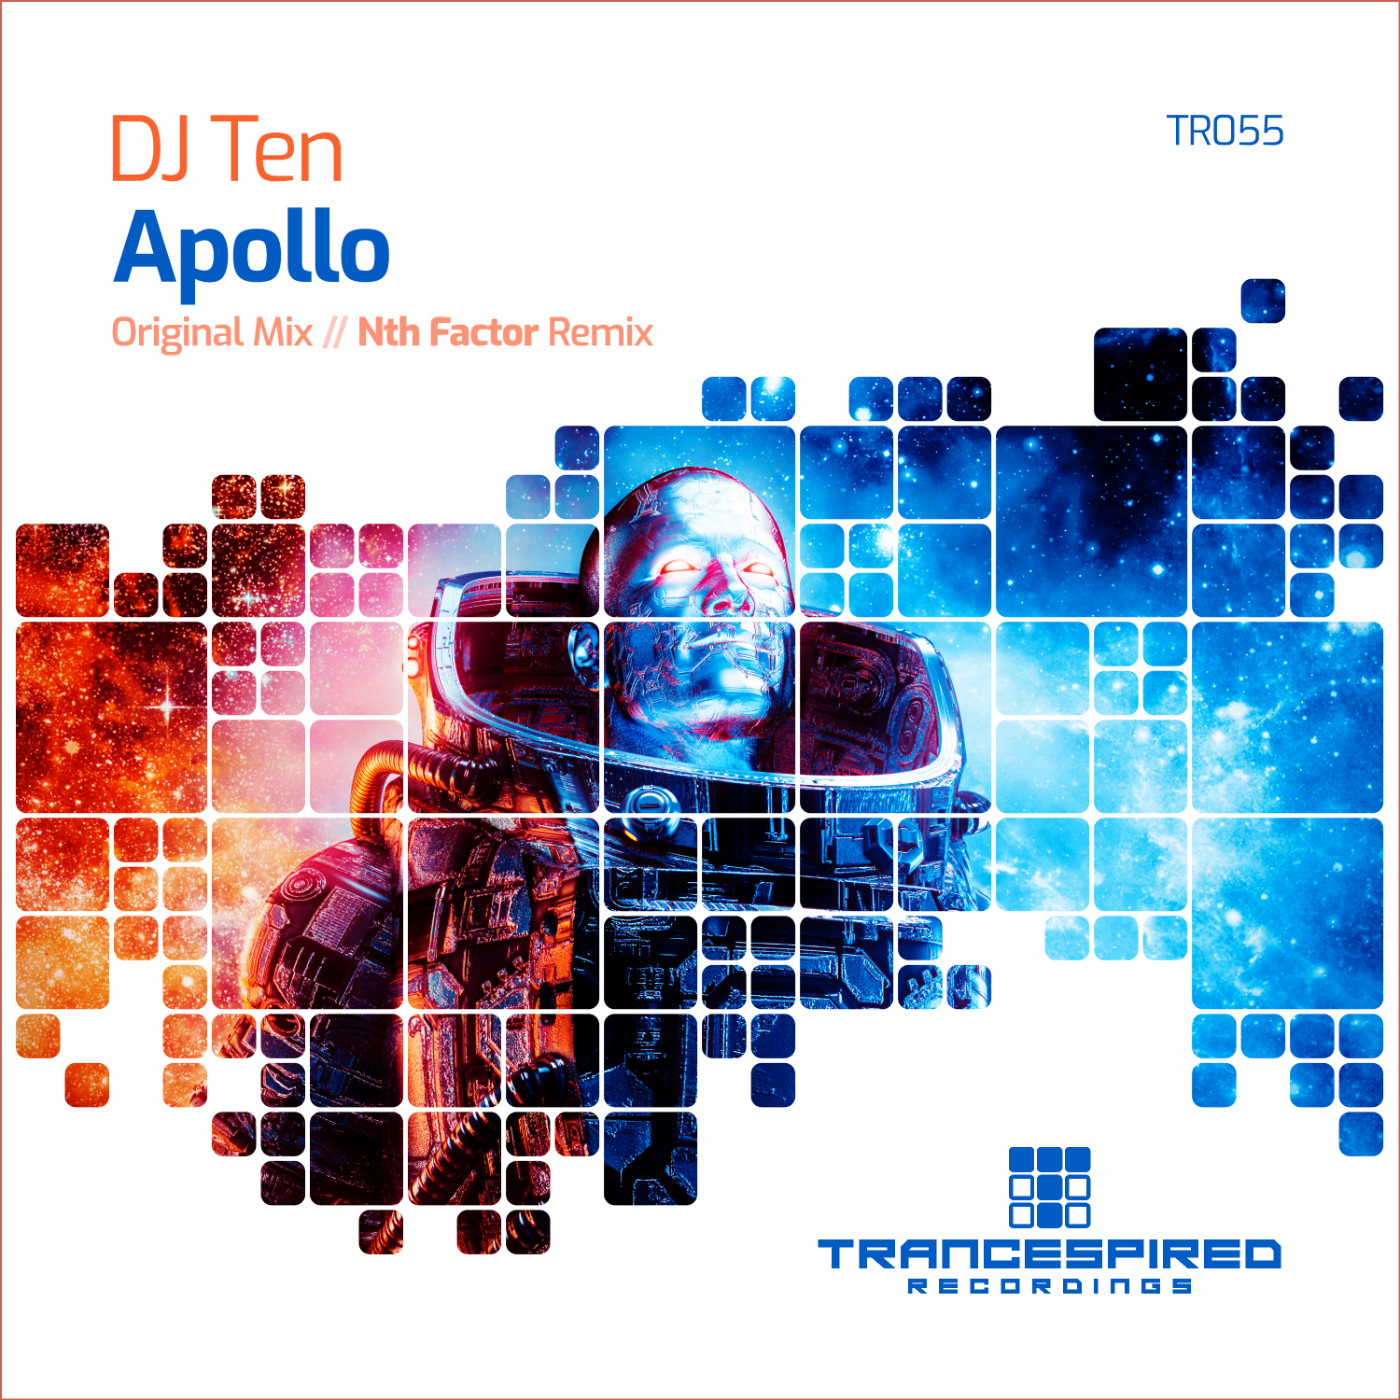 DJ Ten presents Apollo on Trancespired Recordings